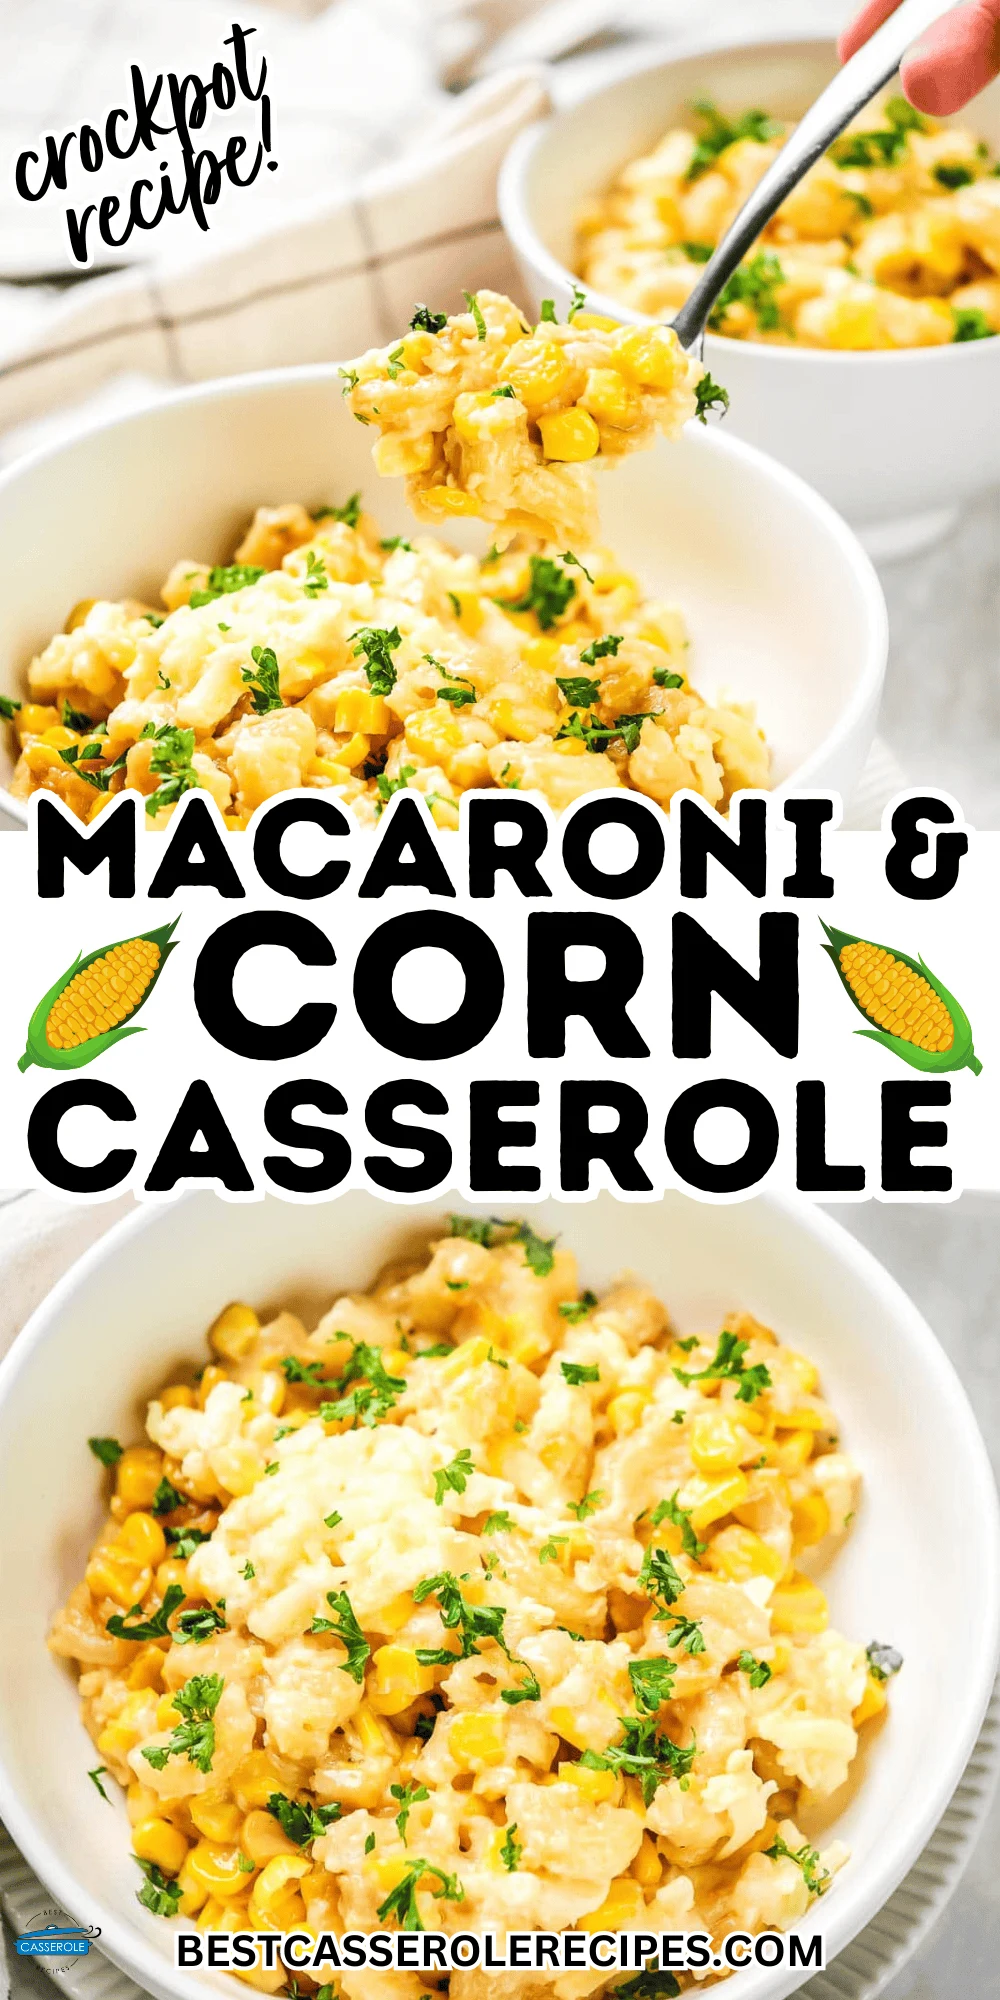 corn and macaroni casserole collage